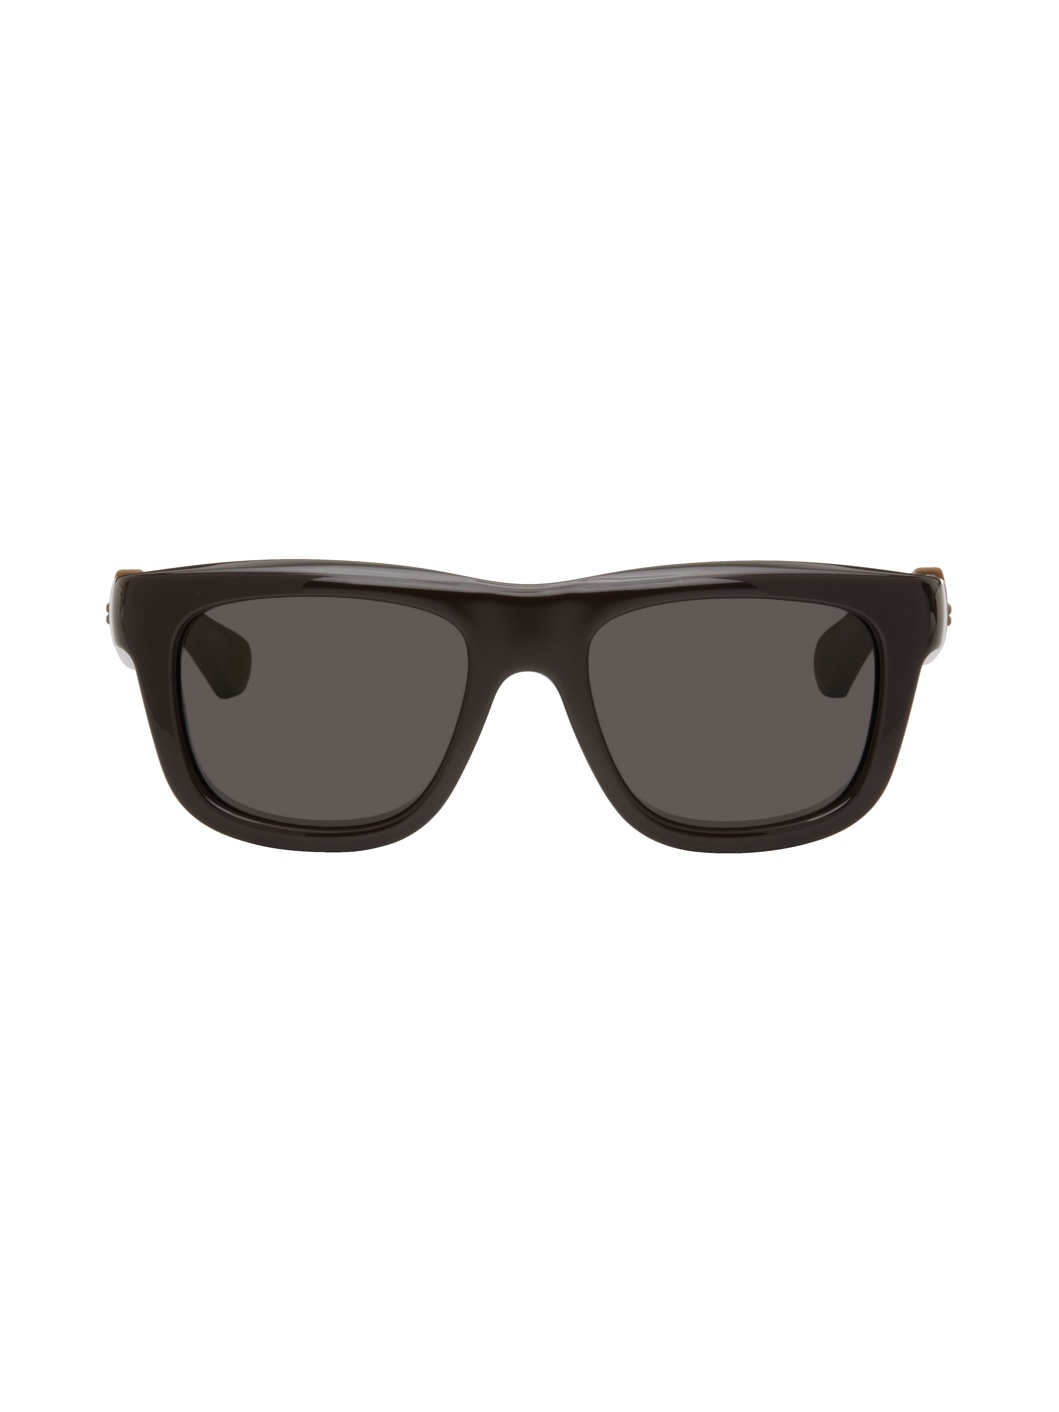 Black Mitre Square Sunglasses - 1